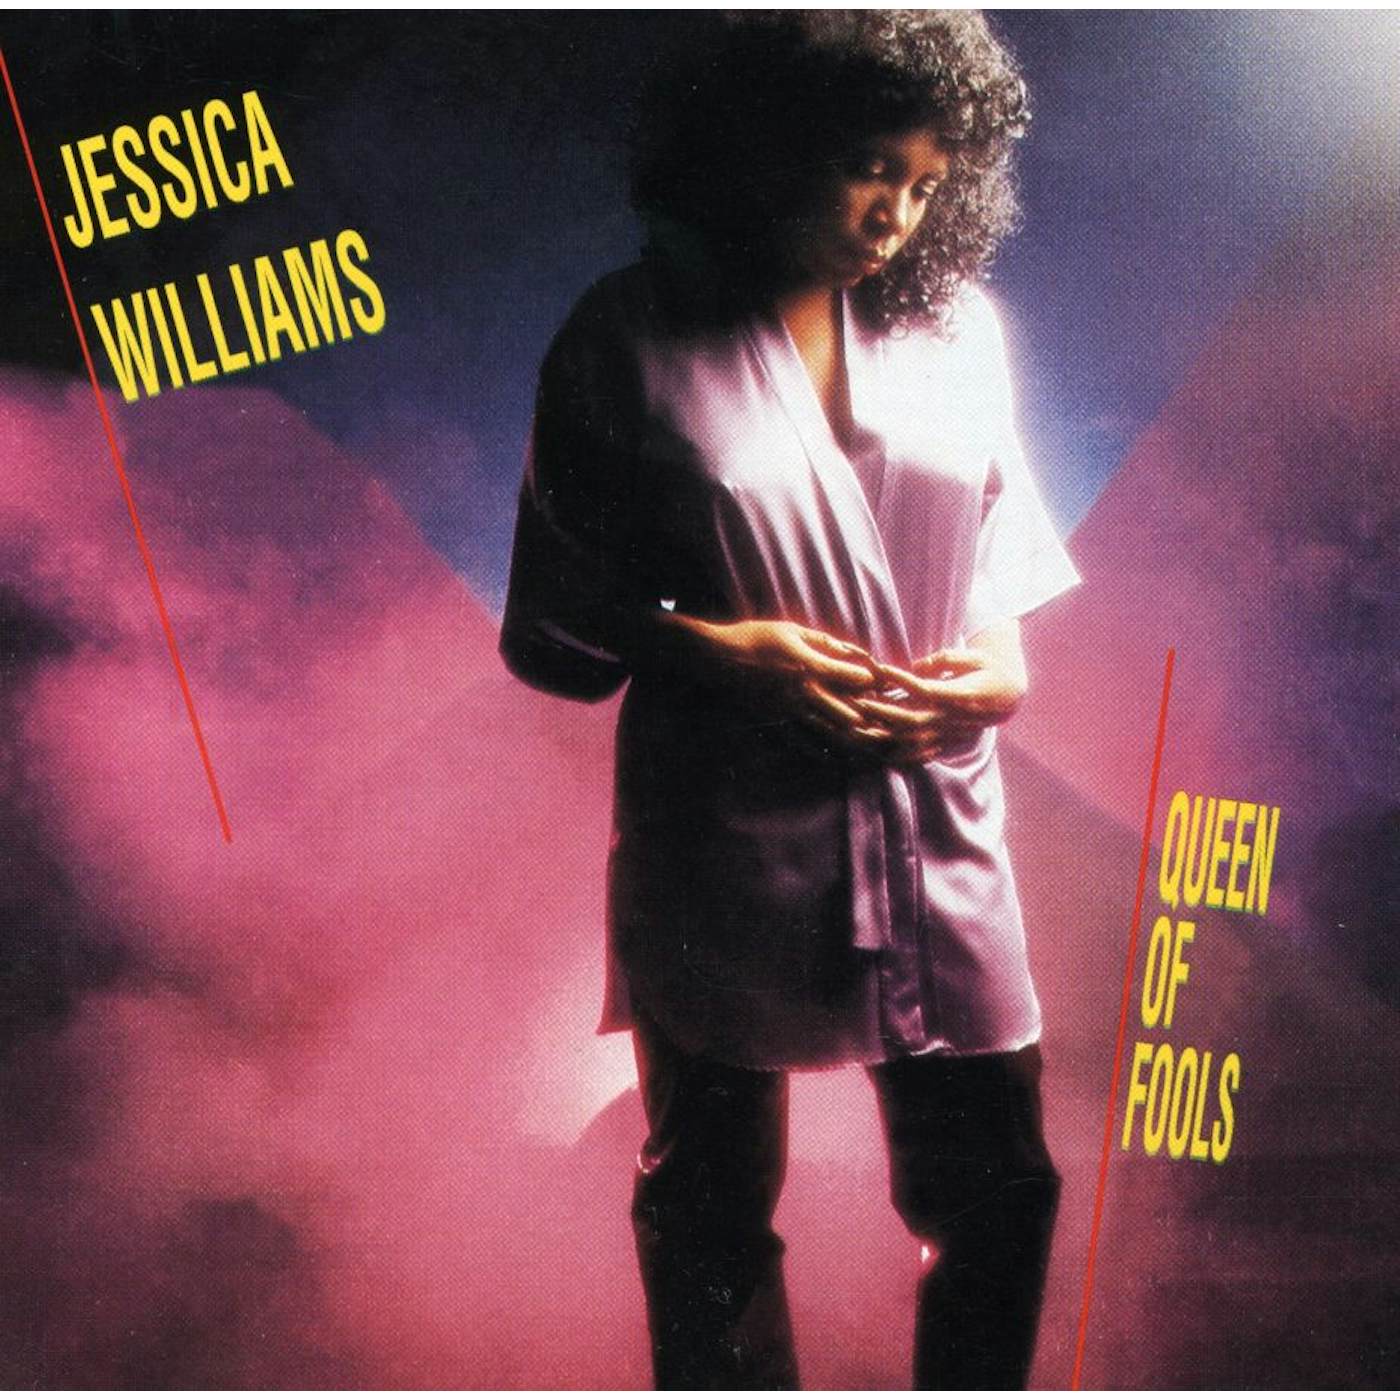 Jessica Williams QUEEN OF FOOLS CD